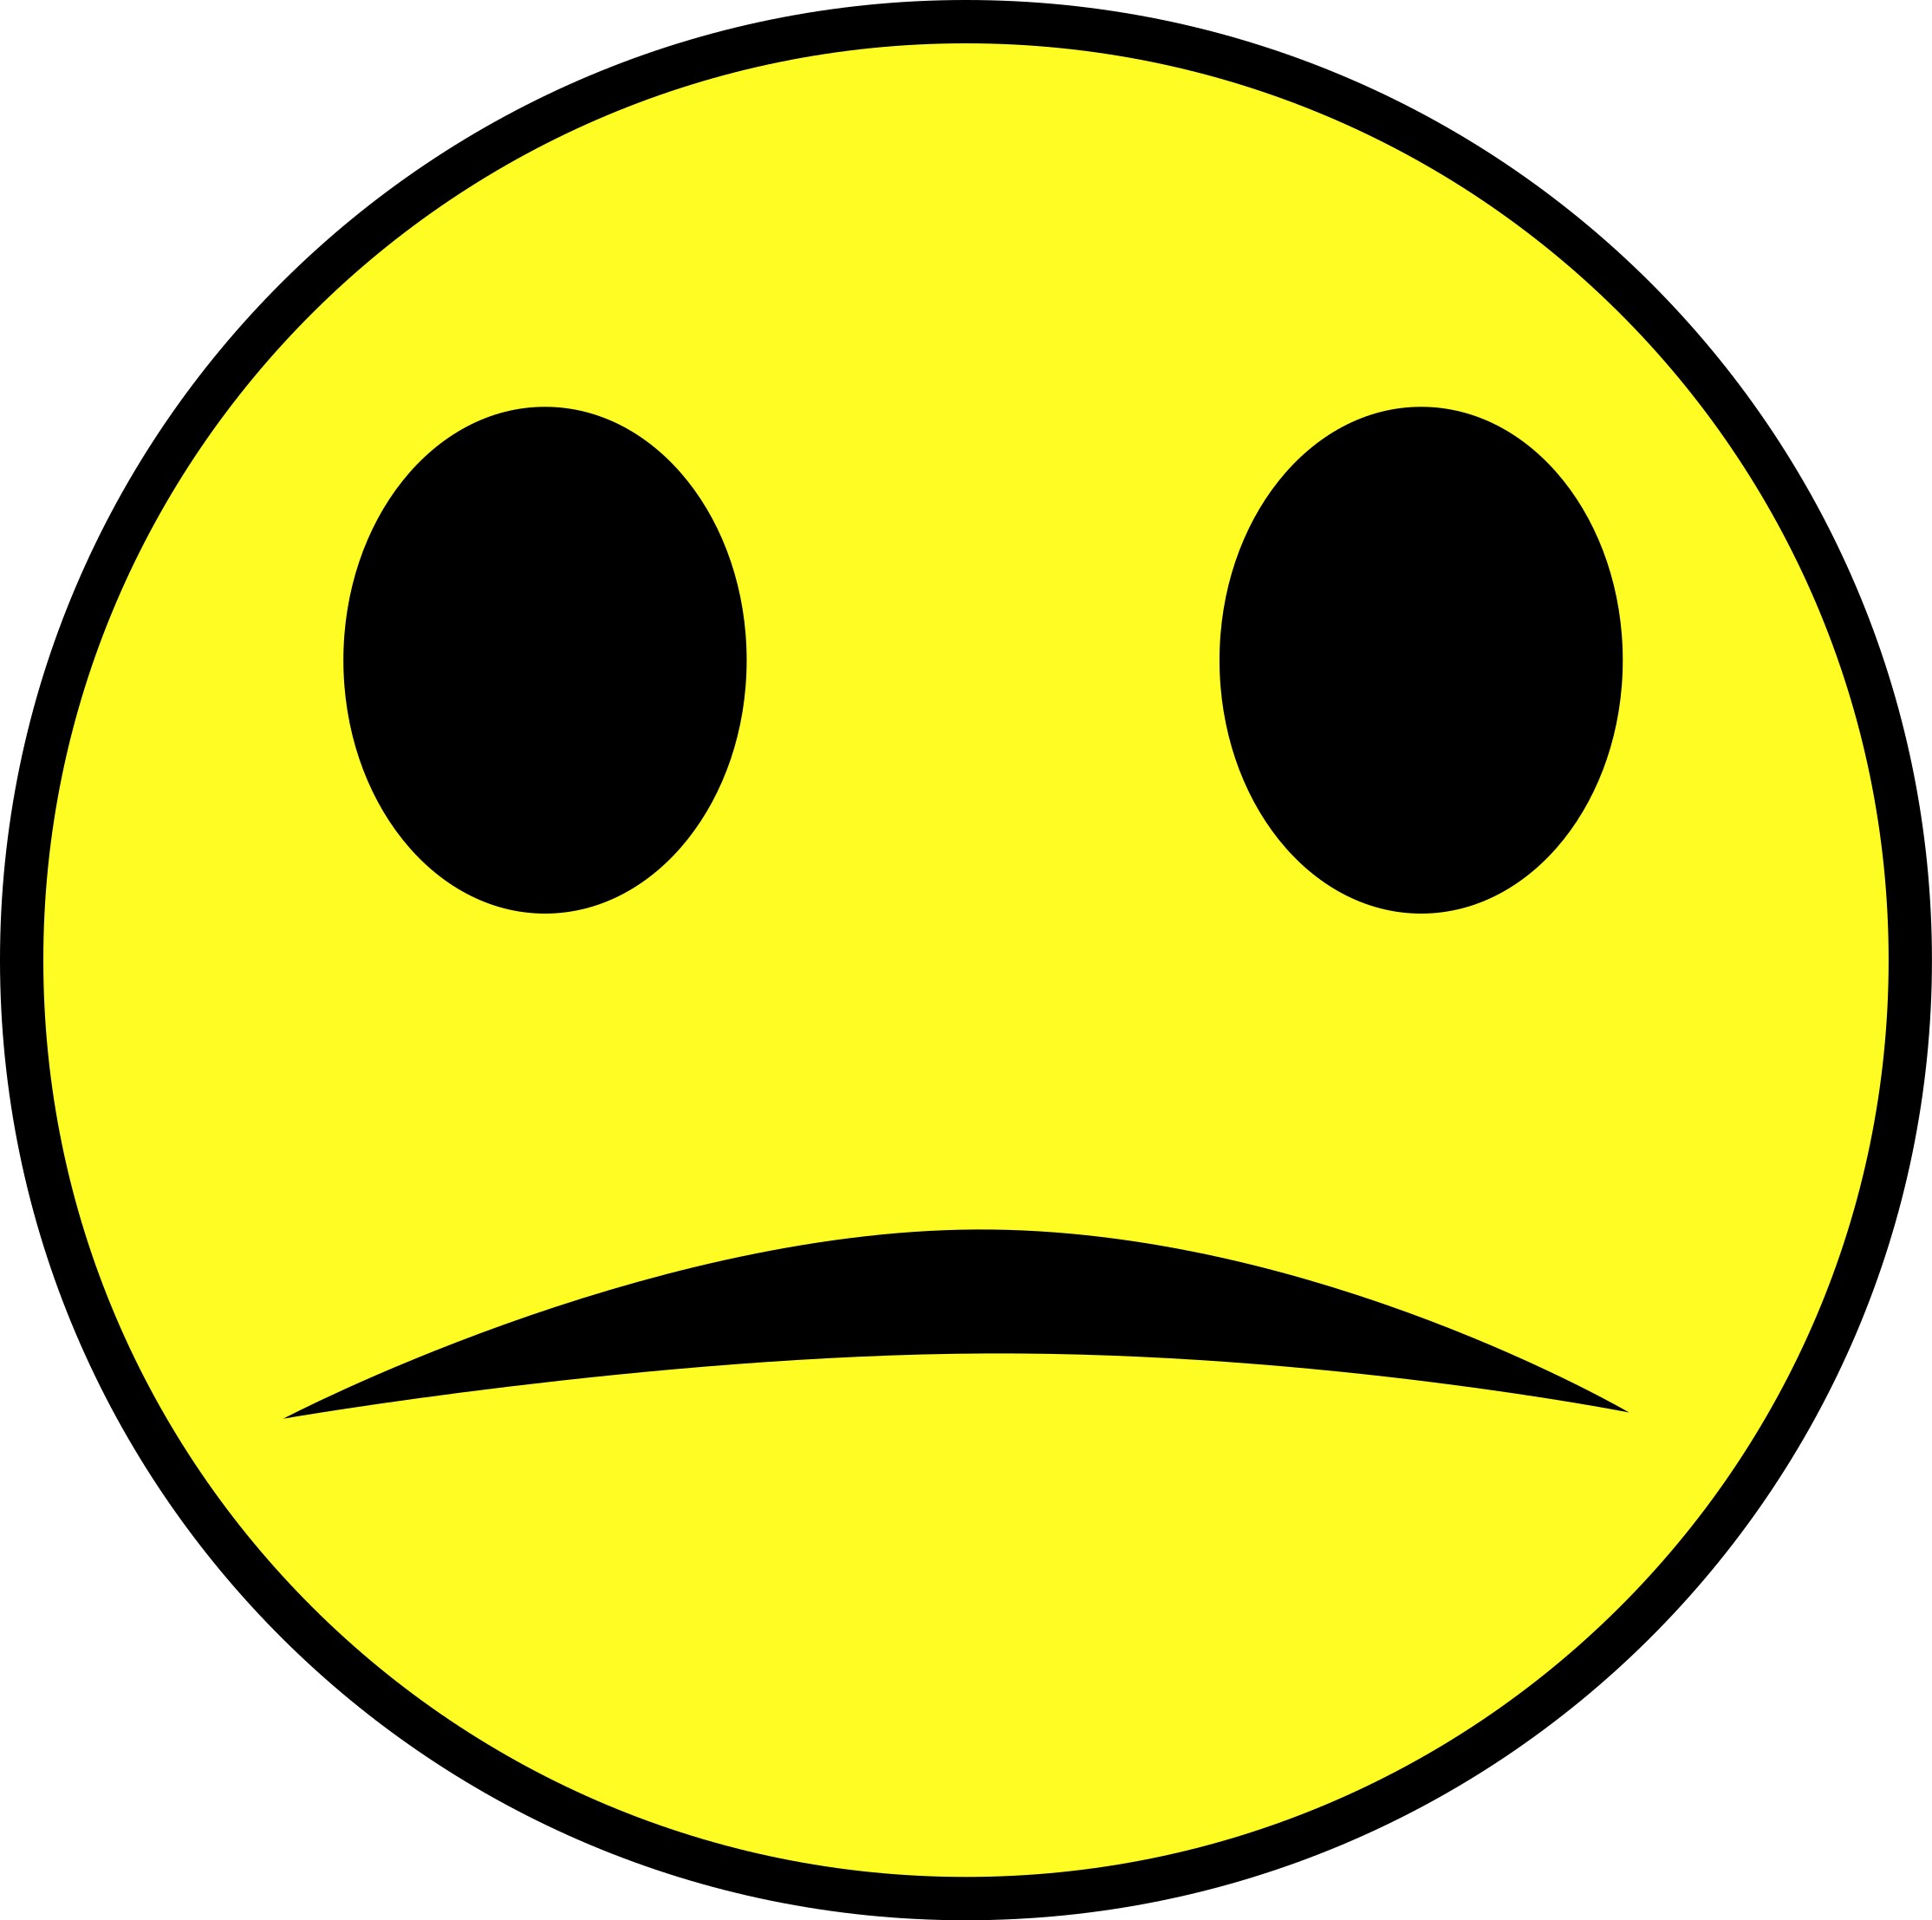 Download File - Sad Face - Svg - Sad Face PNG Image with No Background -  